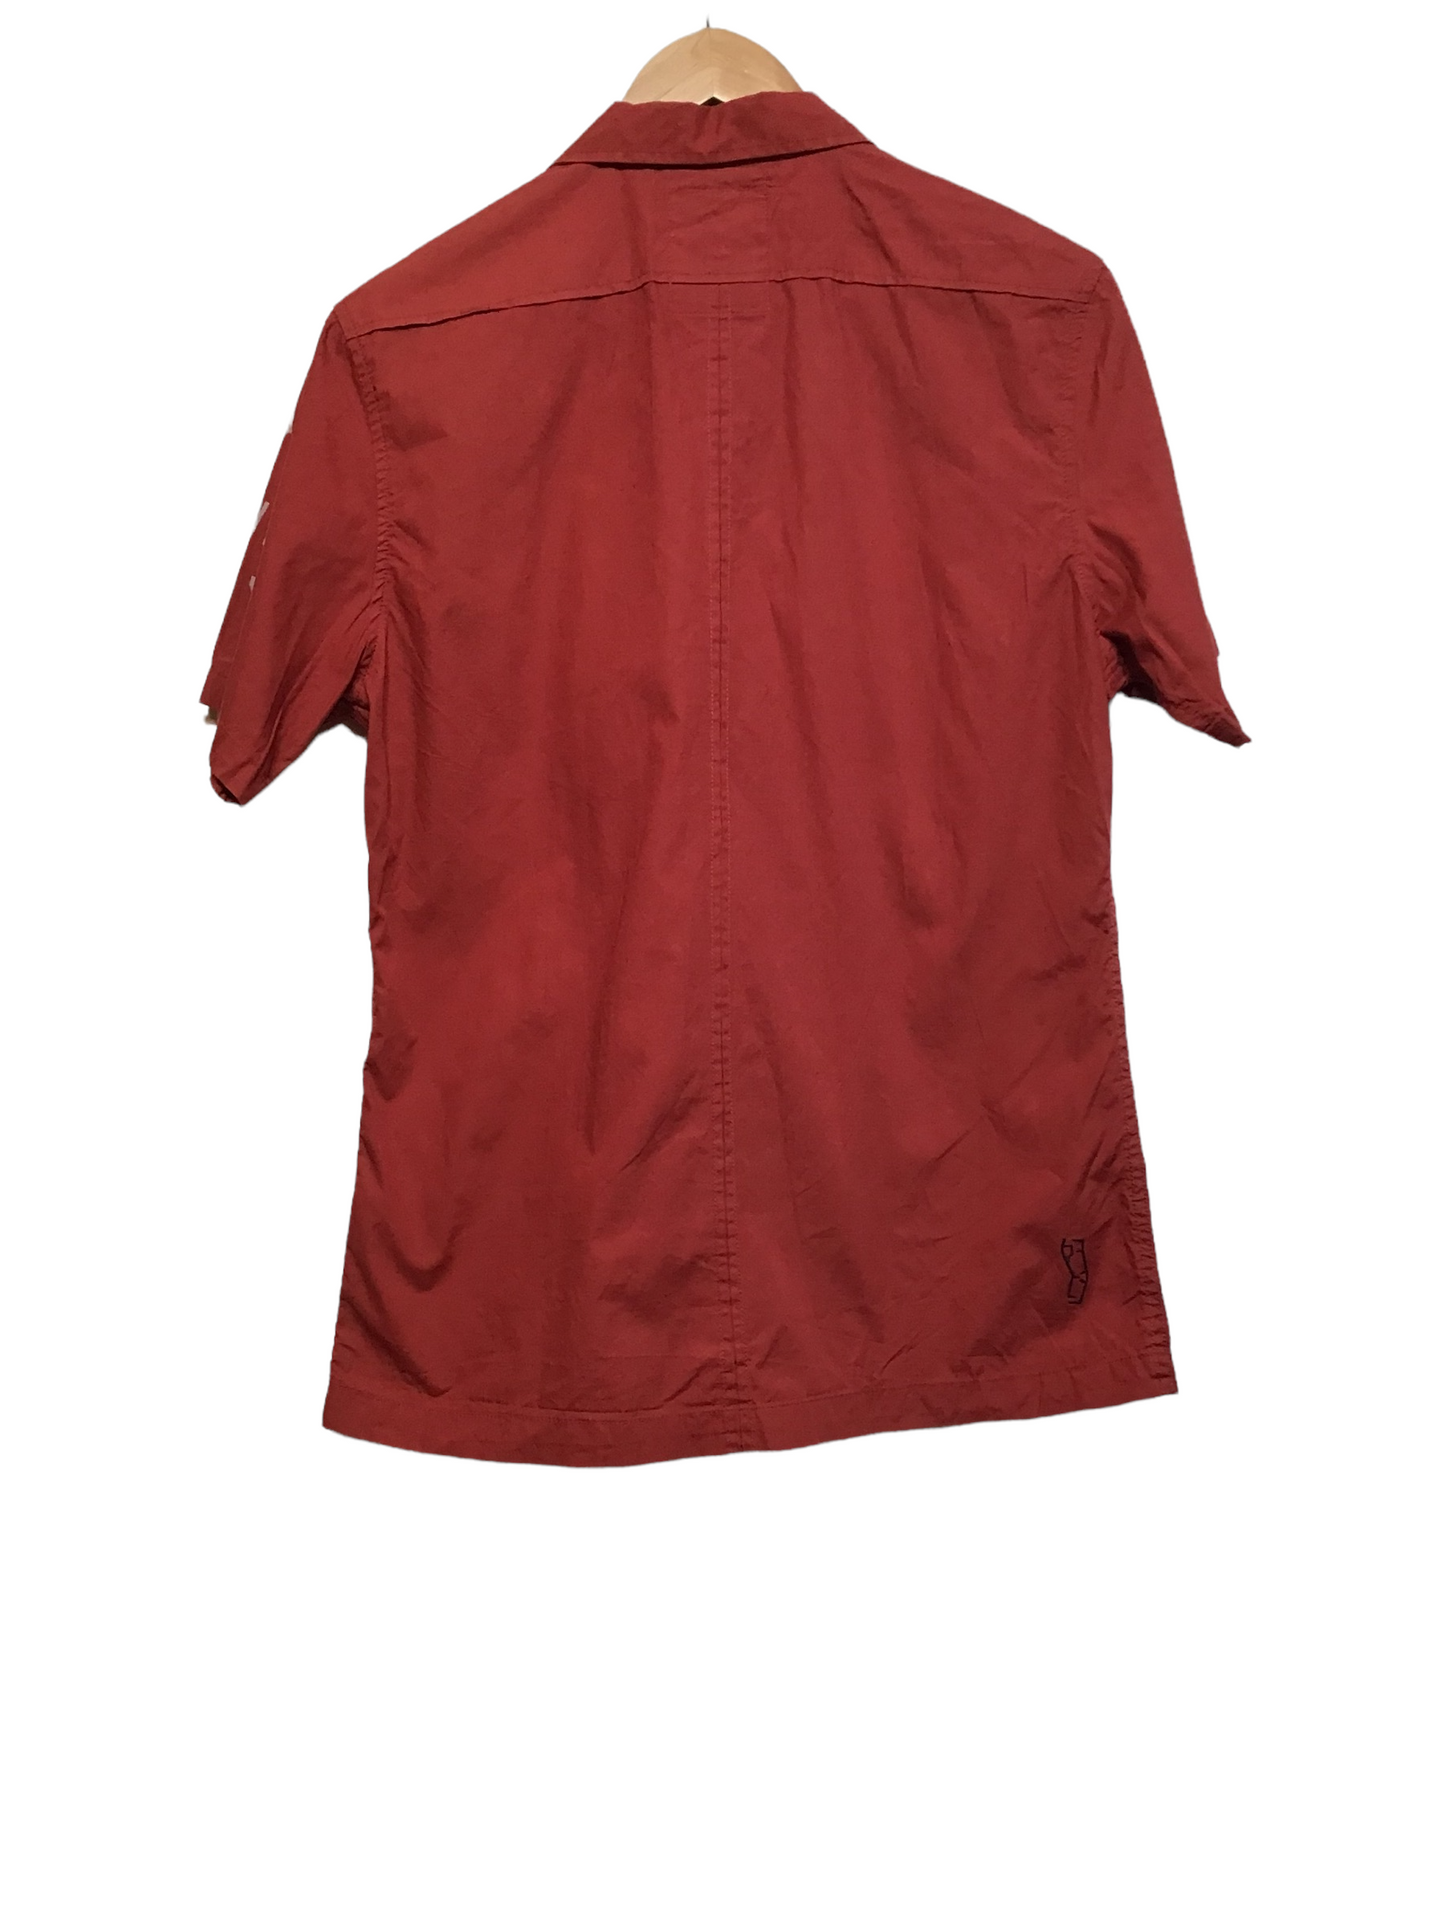 G - Star Short Sleeved Shirt (Size M)